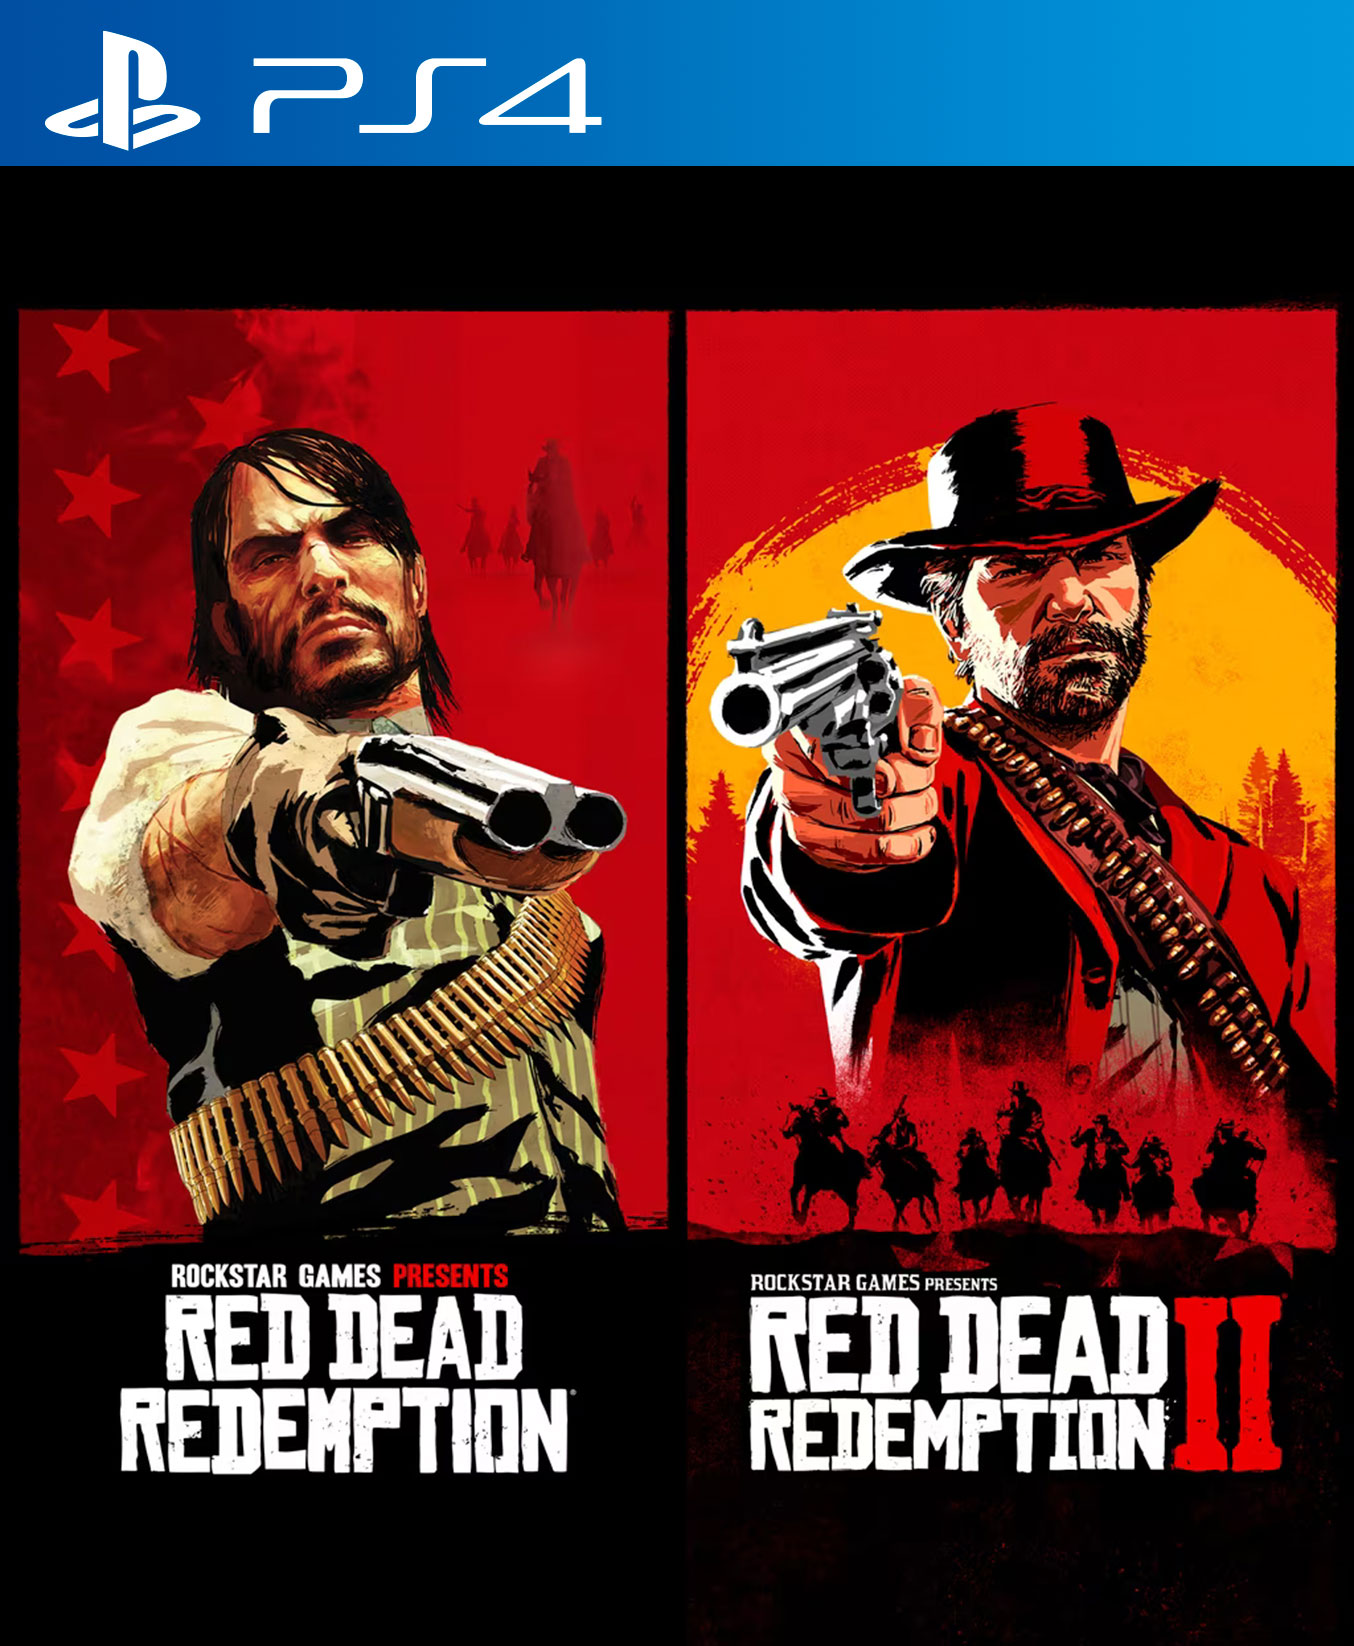  Red Dead Redemption 2 (PS4) : Videojuegos